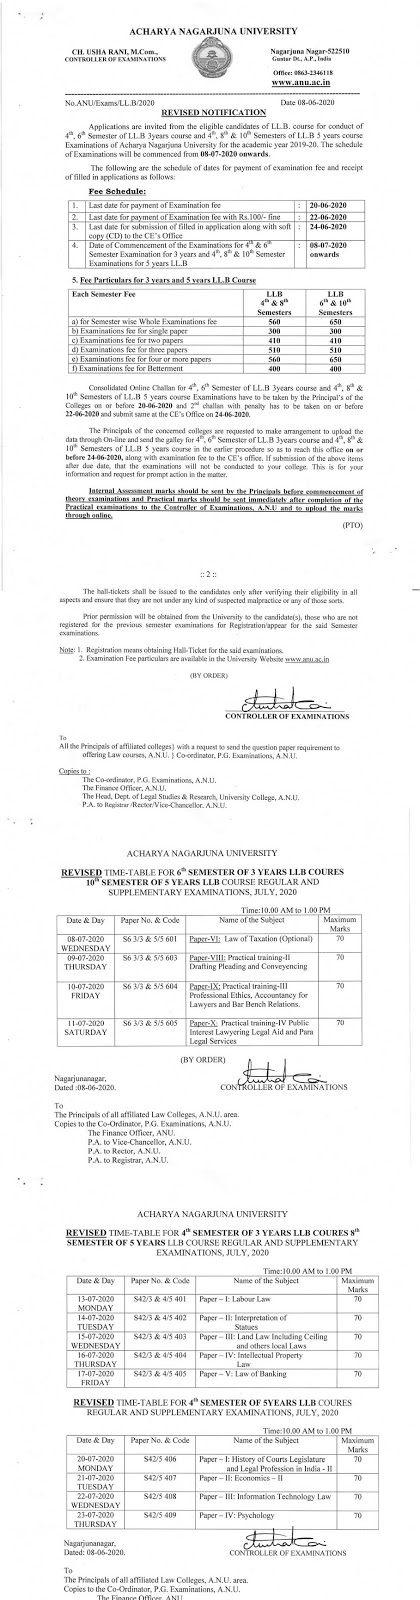 acharya nagarjuna university llb even sem june-july 2020 revised fee notification